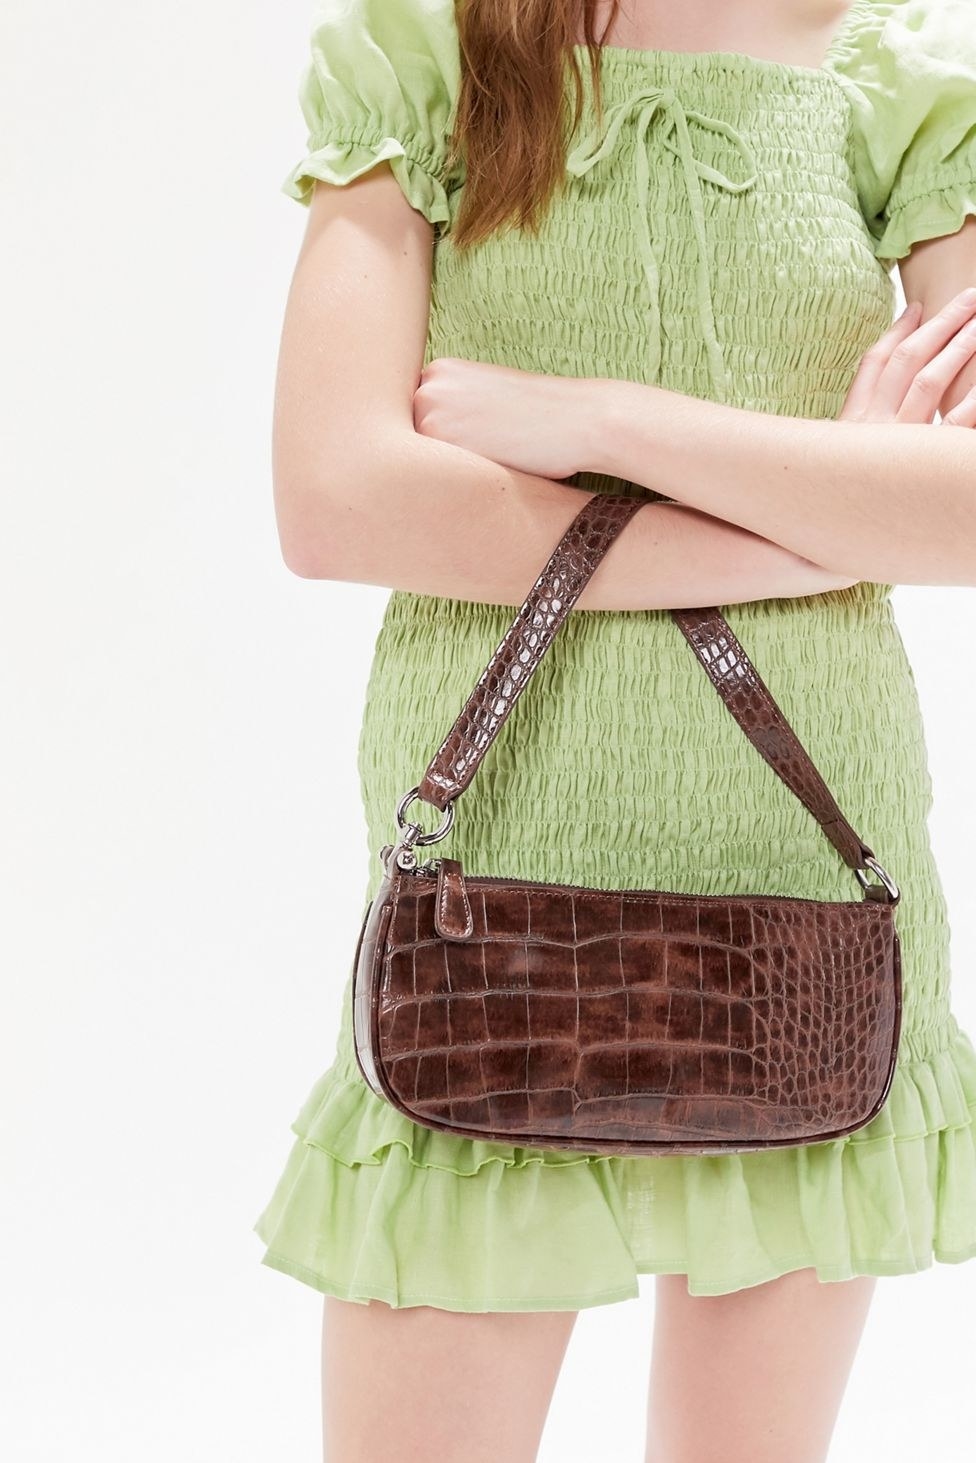 a woman holding a faux crocodile handbag